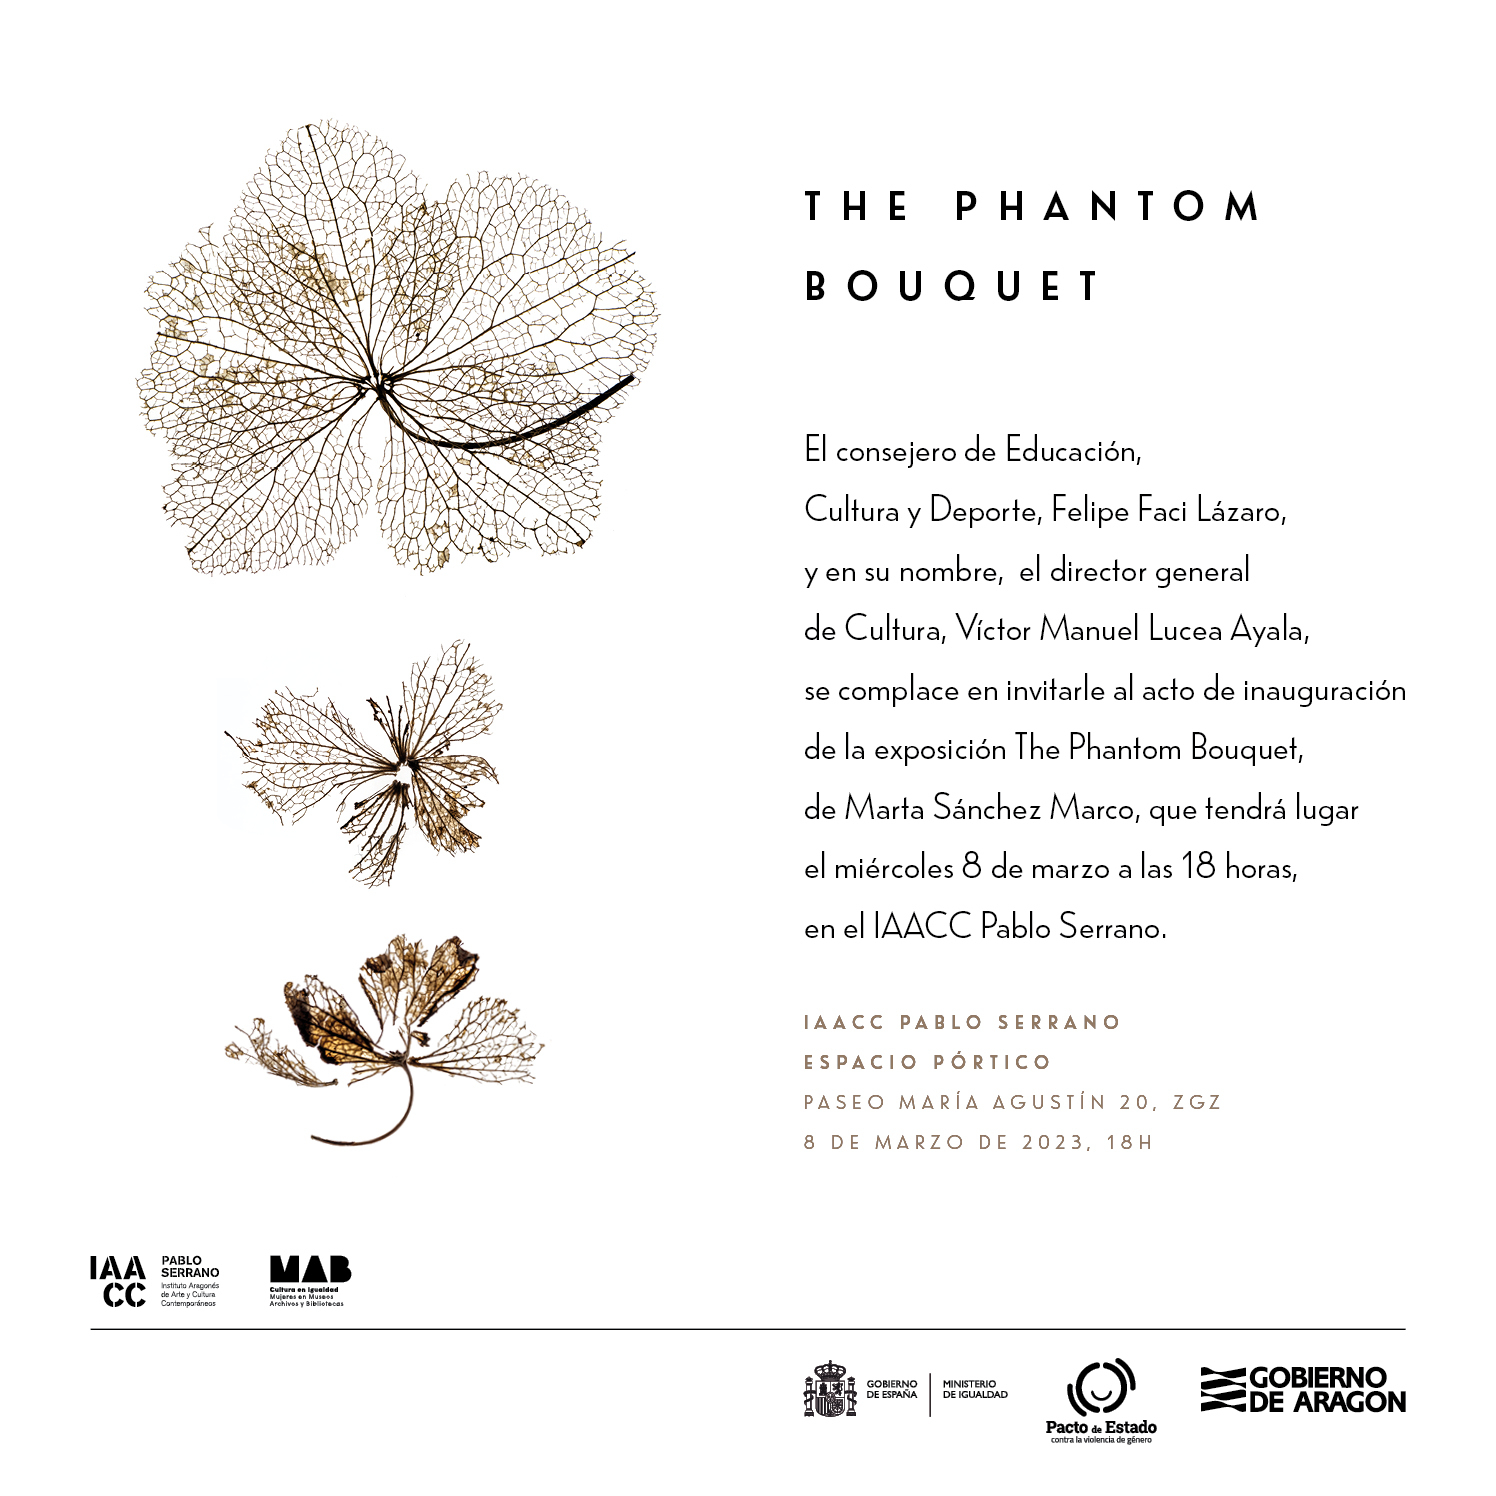 The Phantom Bouquet’. Marta Sánchez Marco